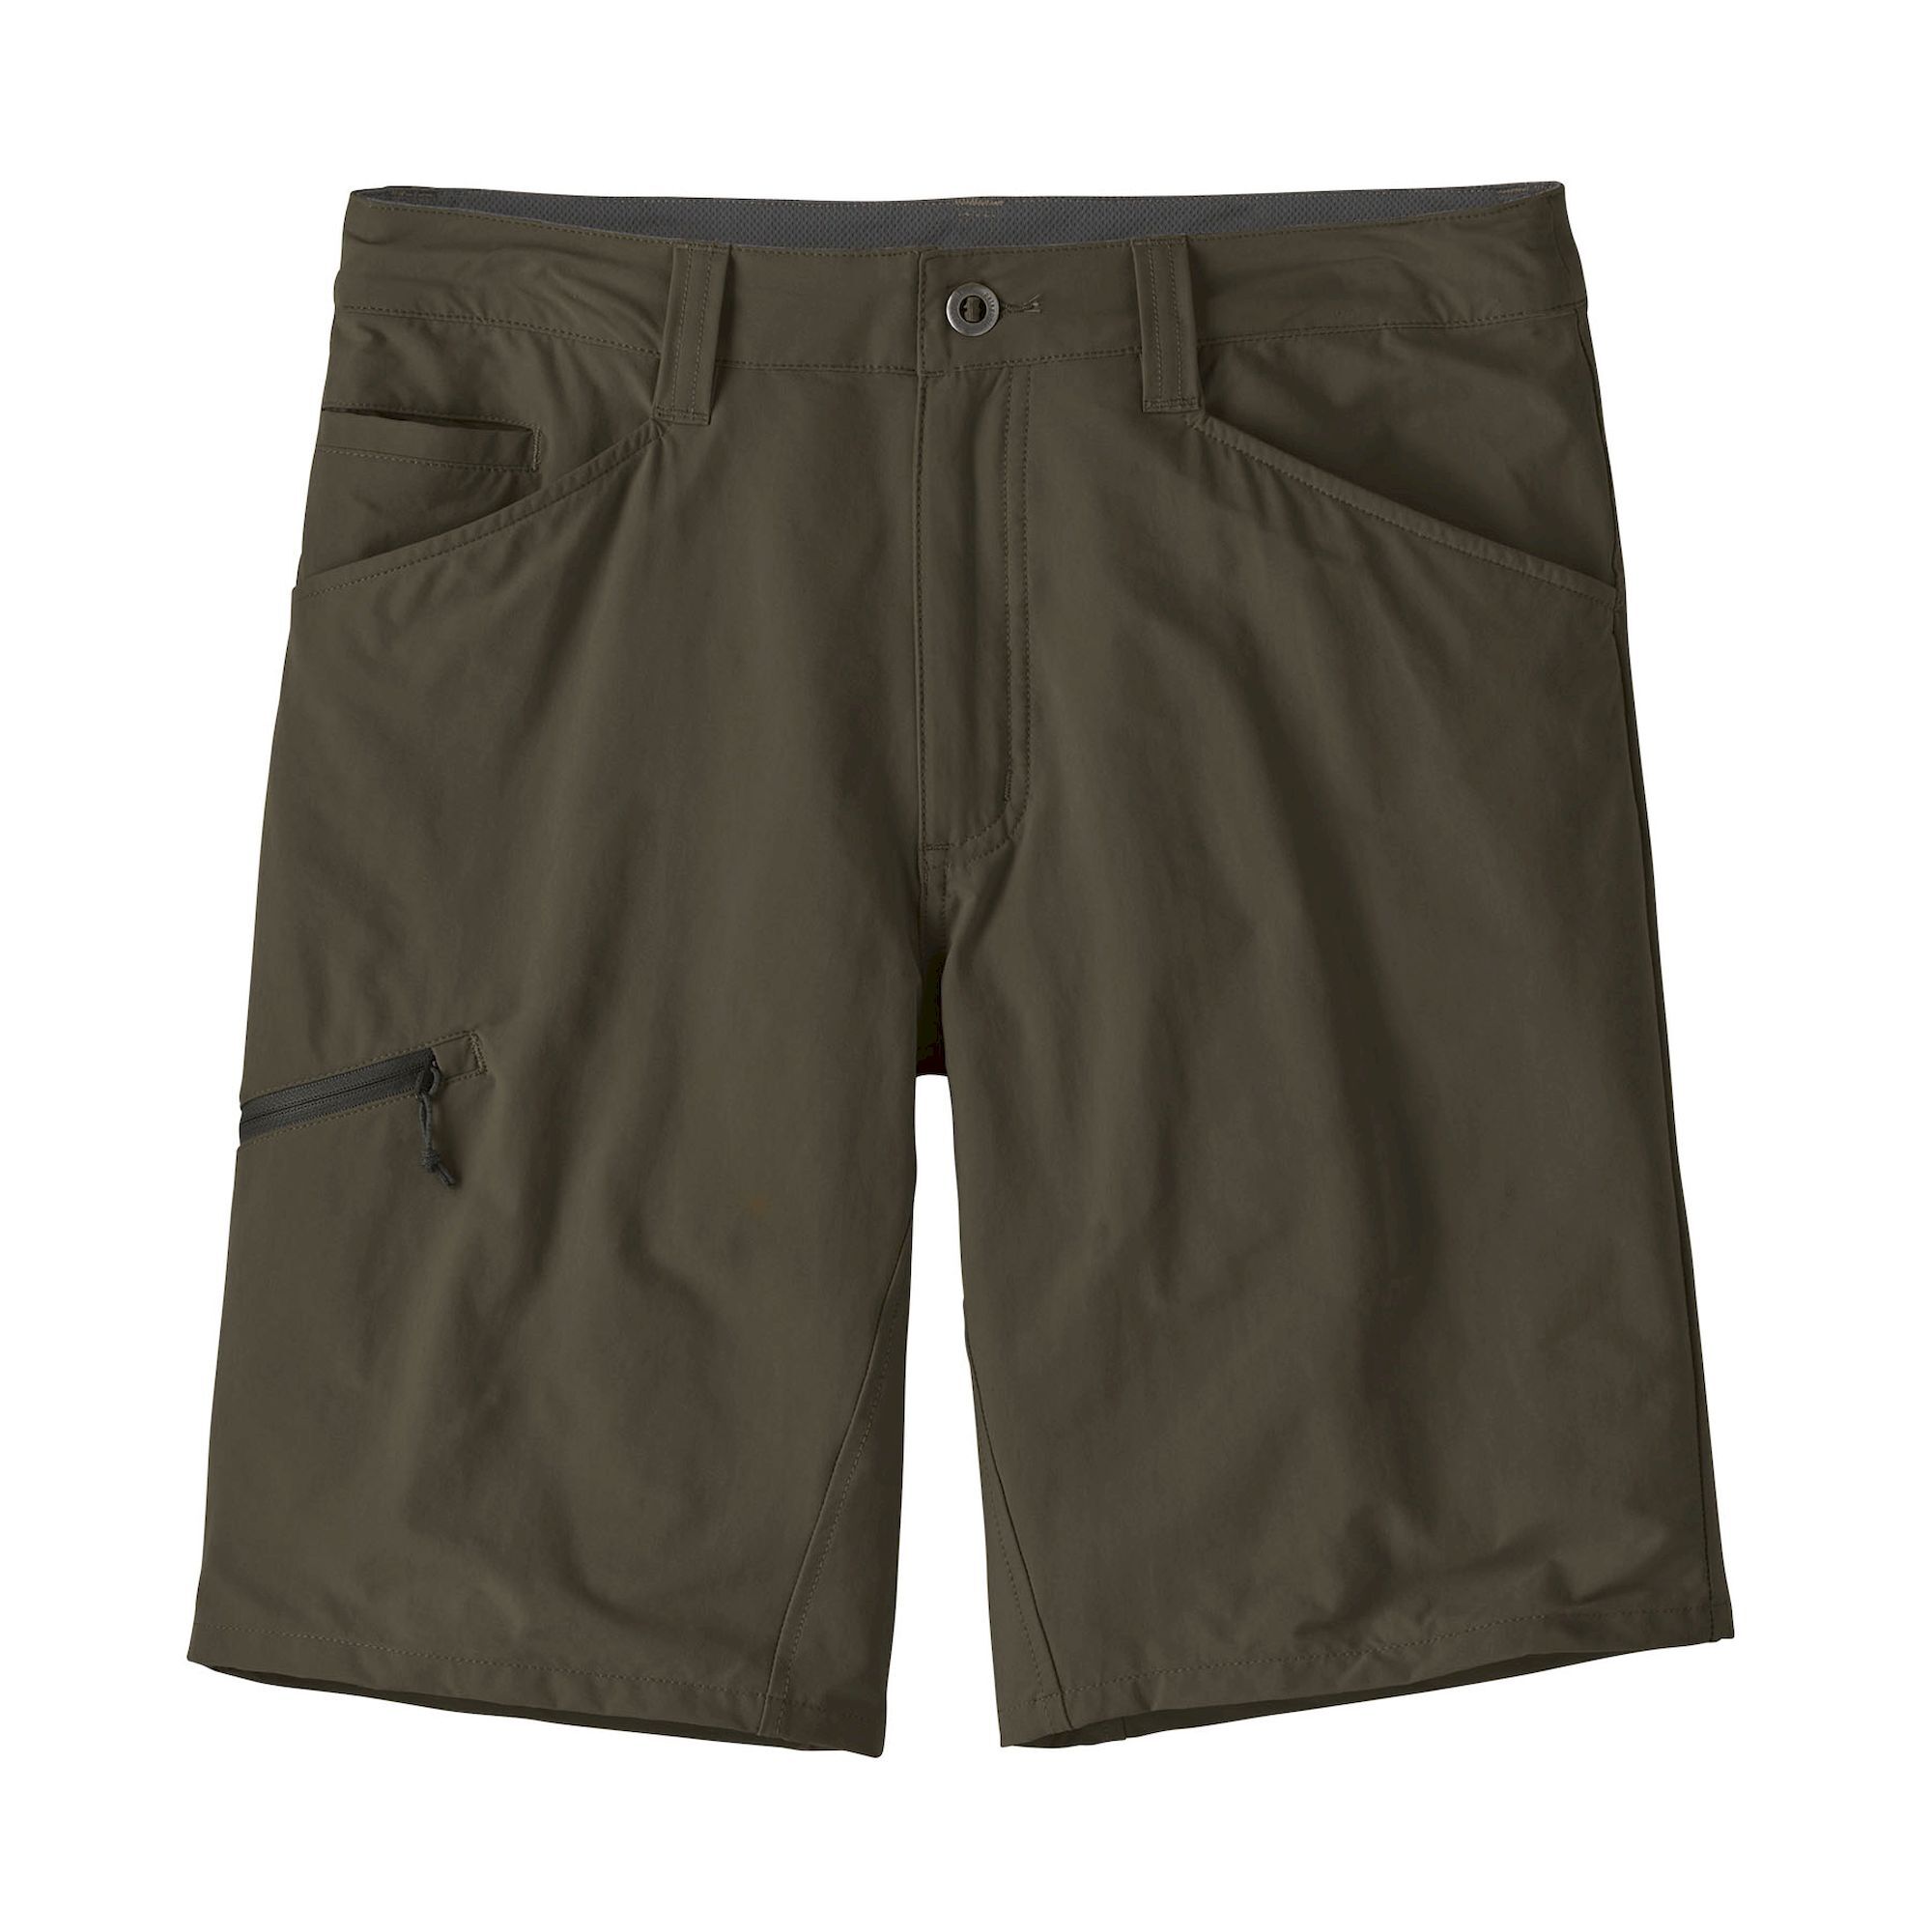 Patagonia - Quandary Shorts - 10 in. - Pantalones cortos - Hombre